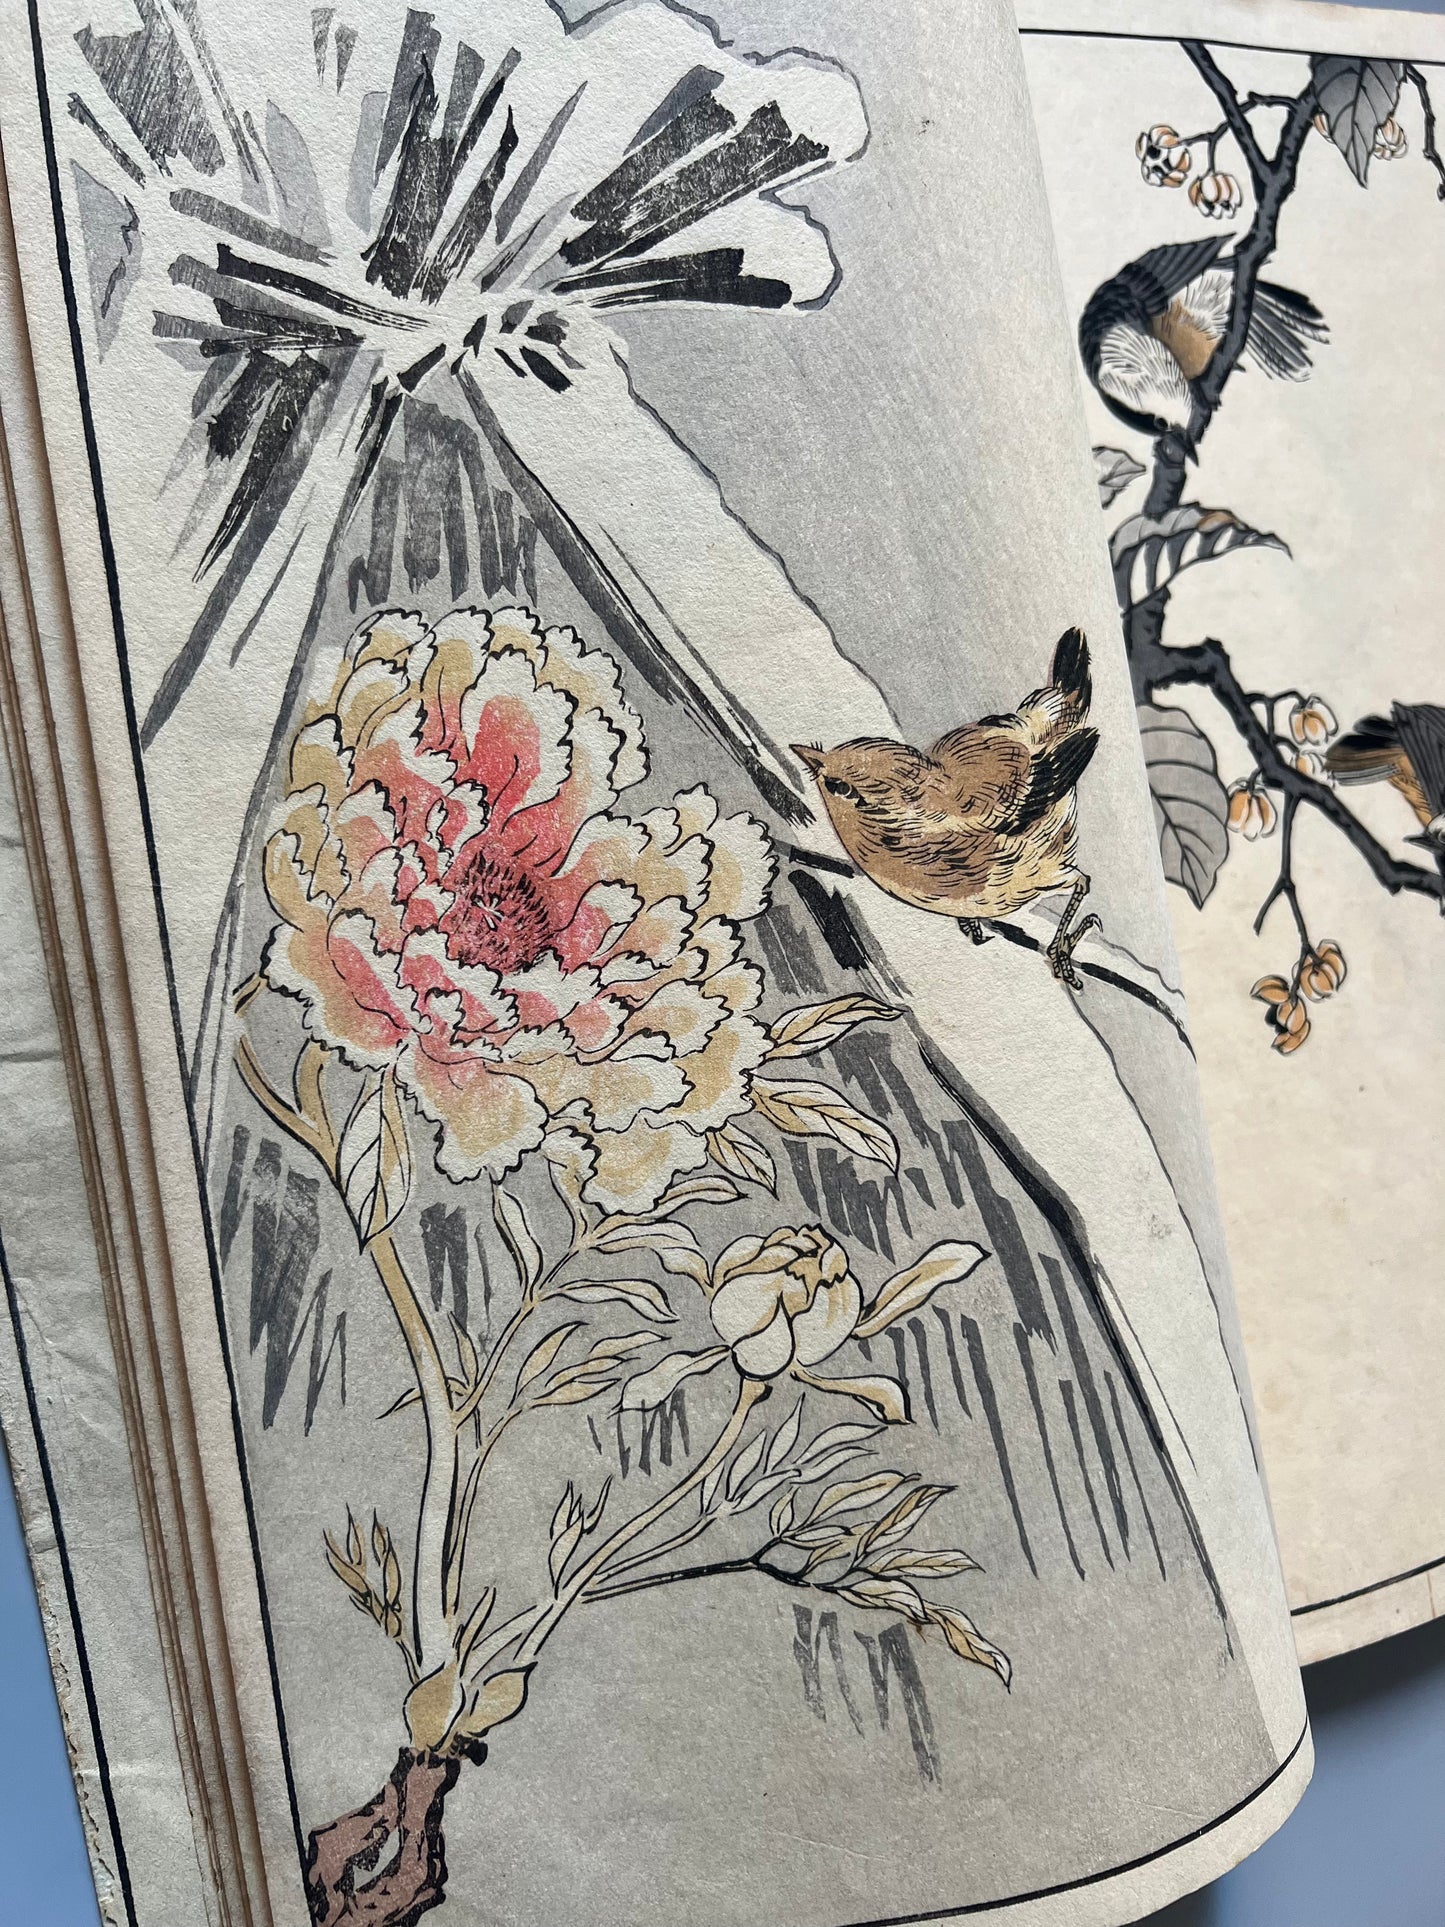 Bairei Hyakucho Gafu Zoko-hen (El álbum de los cien pájaros de Köno Bairei), volumen I - Okura Magobei, ca. 1884